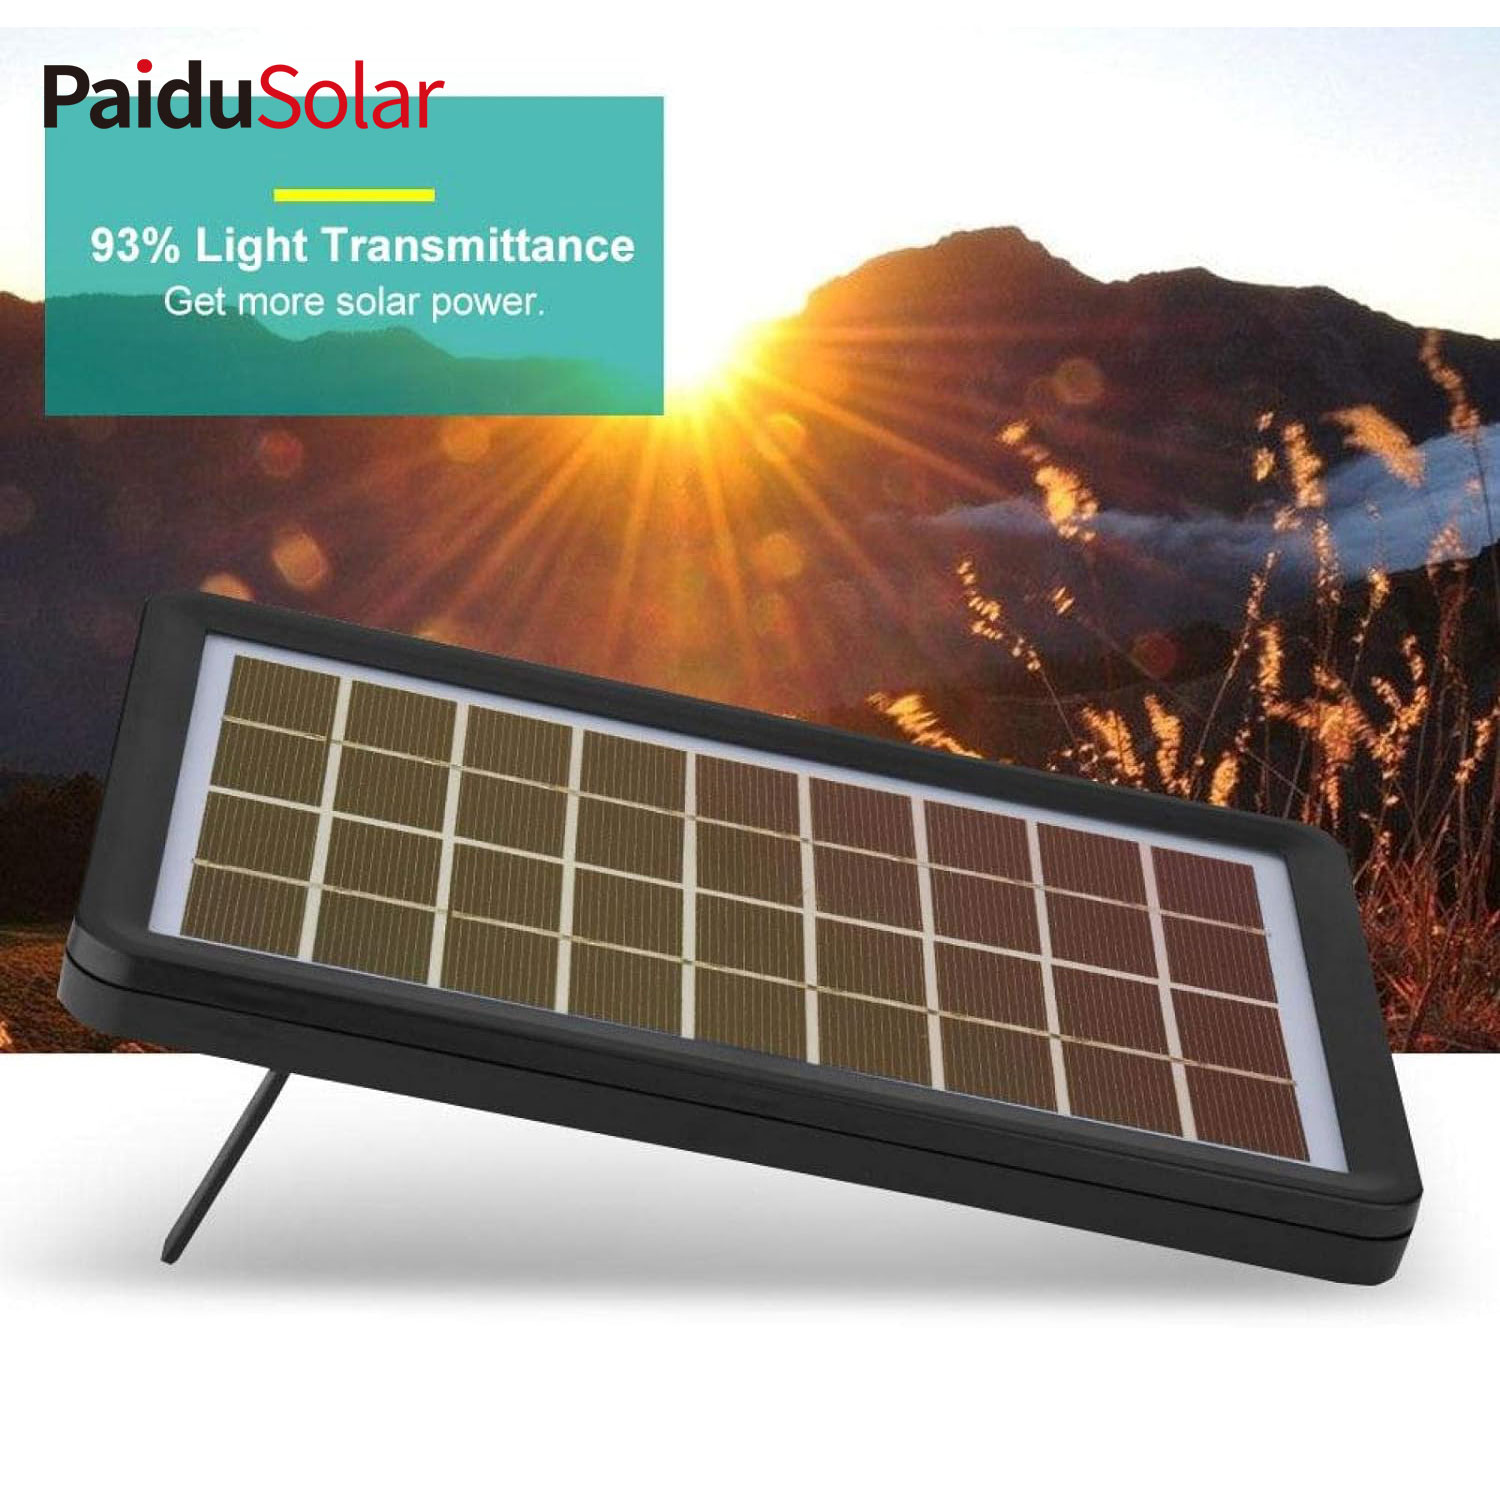 PaiduSolar 9V 3W પોલી સિલિકોન સોલર પેનલ બેટરી ચાર્જિંગ બોટ માટે સોલર સેલ_9mh7